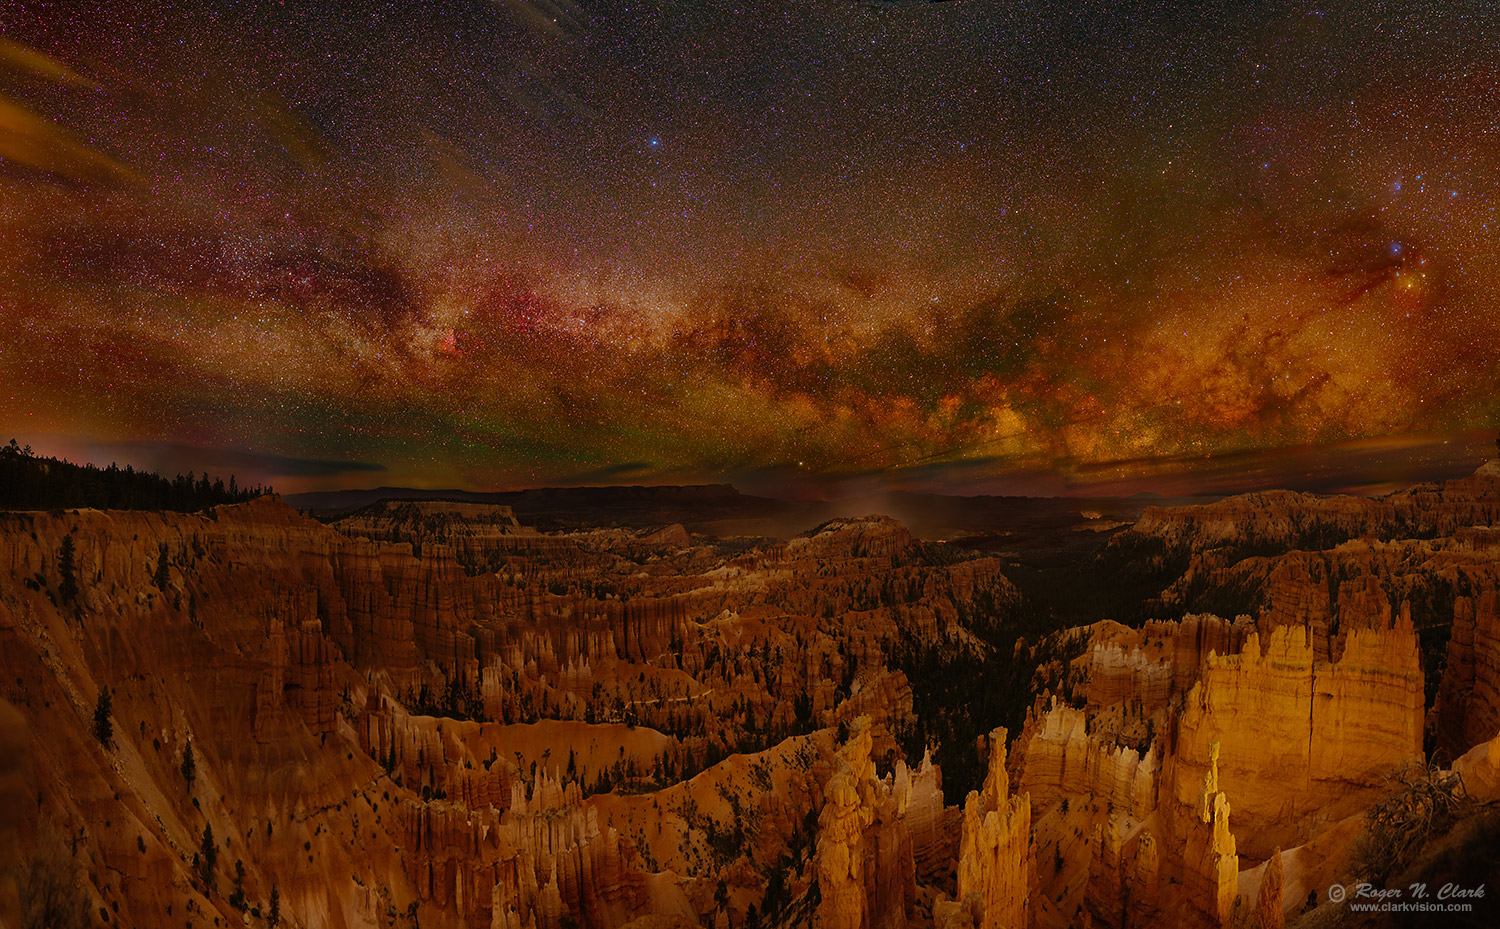 image bryce.canyon-n.p-rclark-.c05.07.2021-4C3A0180-264-h-c1-1500.jpg is Copyrighted by Roger N. Clark, www.clarkvision.com